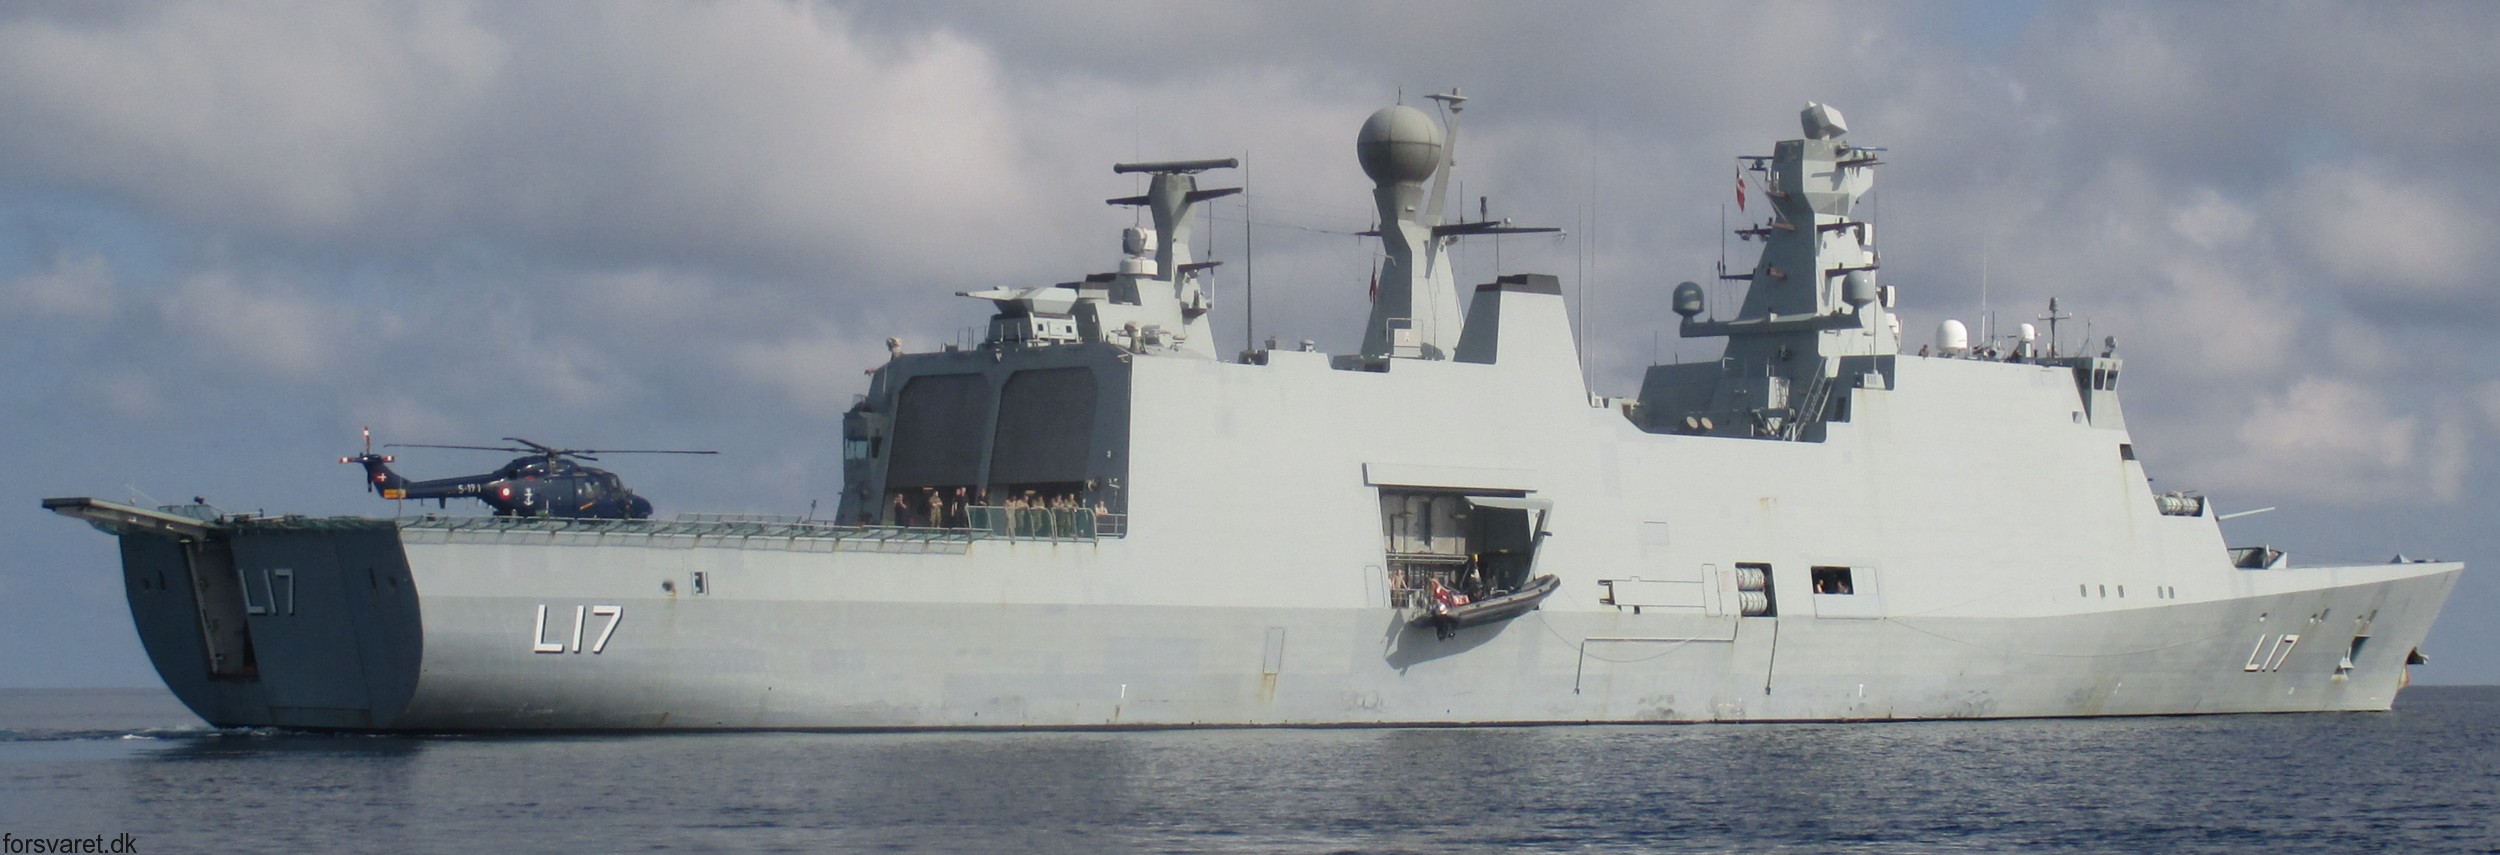 f-342 hdms esbern snare l-17 frigate command support ship royal danish navy 05